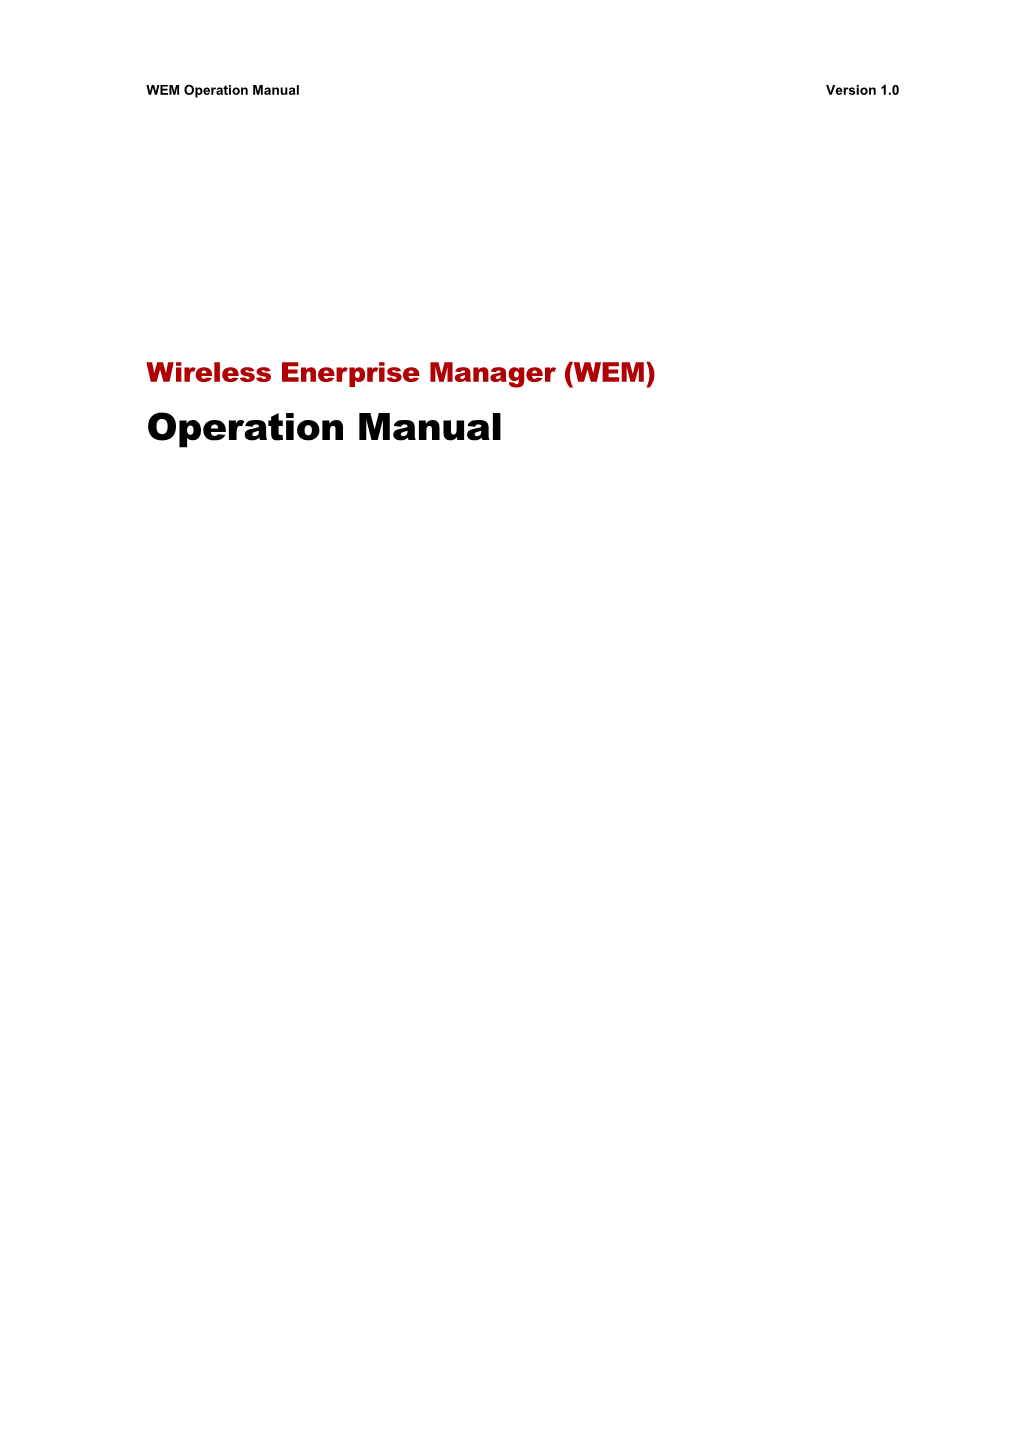 Wireless Enerprise Manager (WEM) Operation Manual